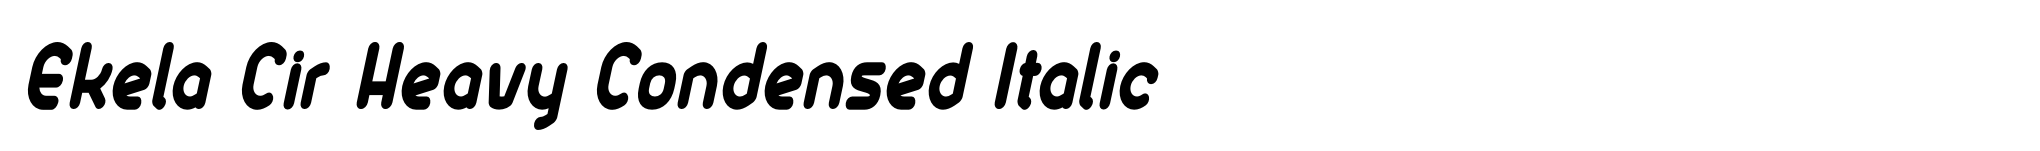 Ekela Cir Heavy Condensed Italic image